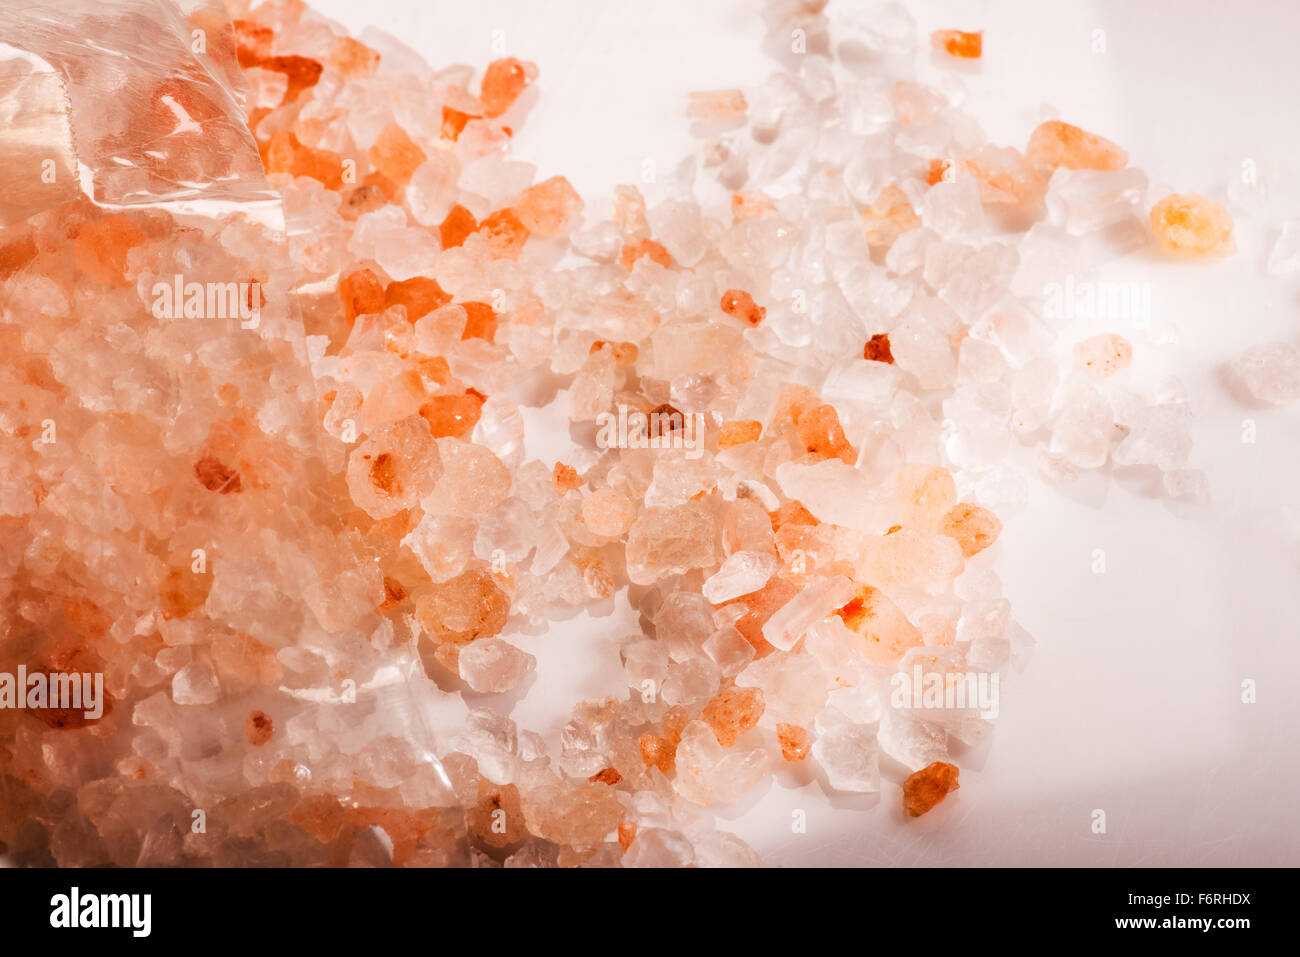 Rosa Himalaya-Salz, Himalaya, Feinschmecker, Gourmet-Salz, Essen, Zutat, Gewürz, Salz, teuer, wertvoll, Hintergrund-Exemplar, Stockfoto